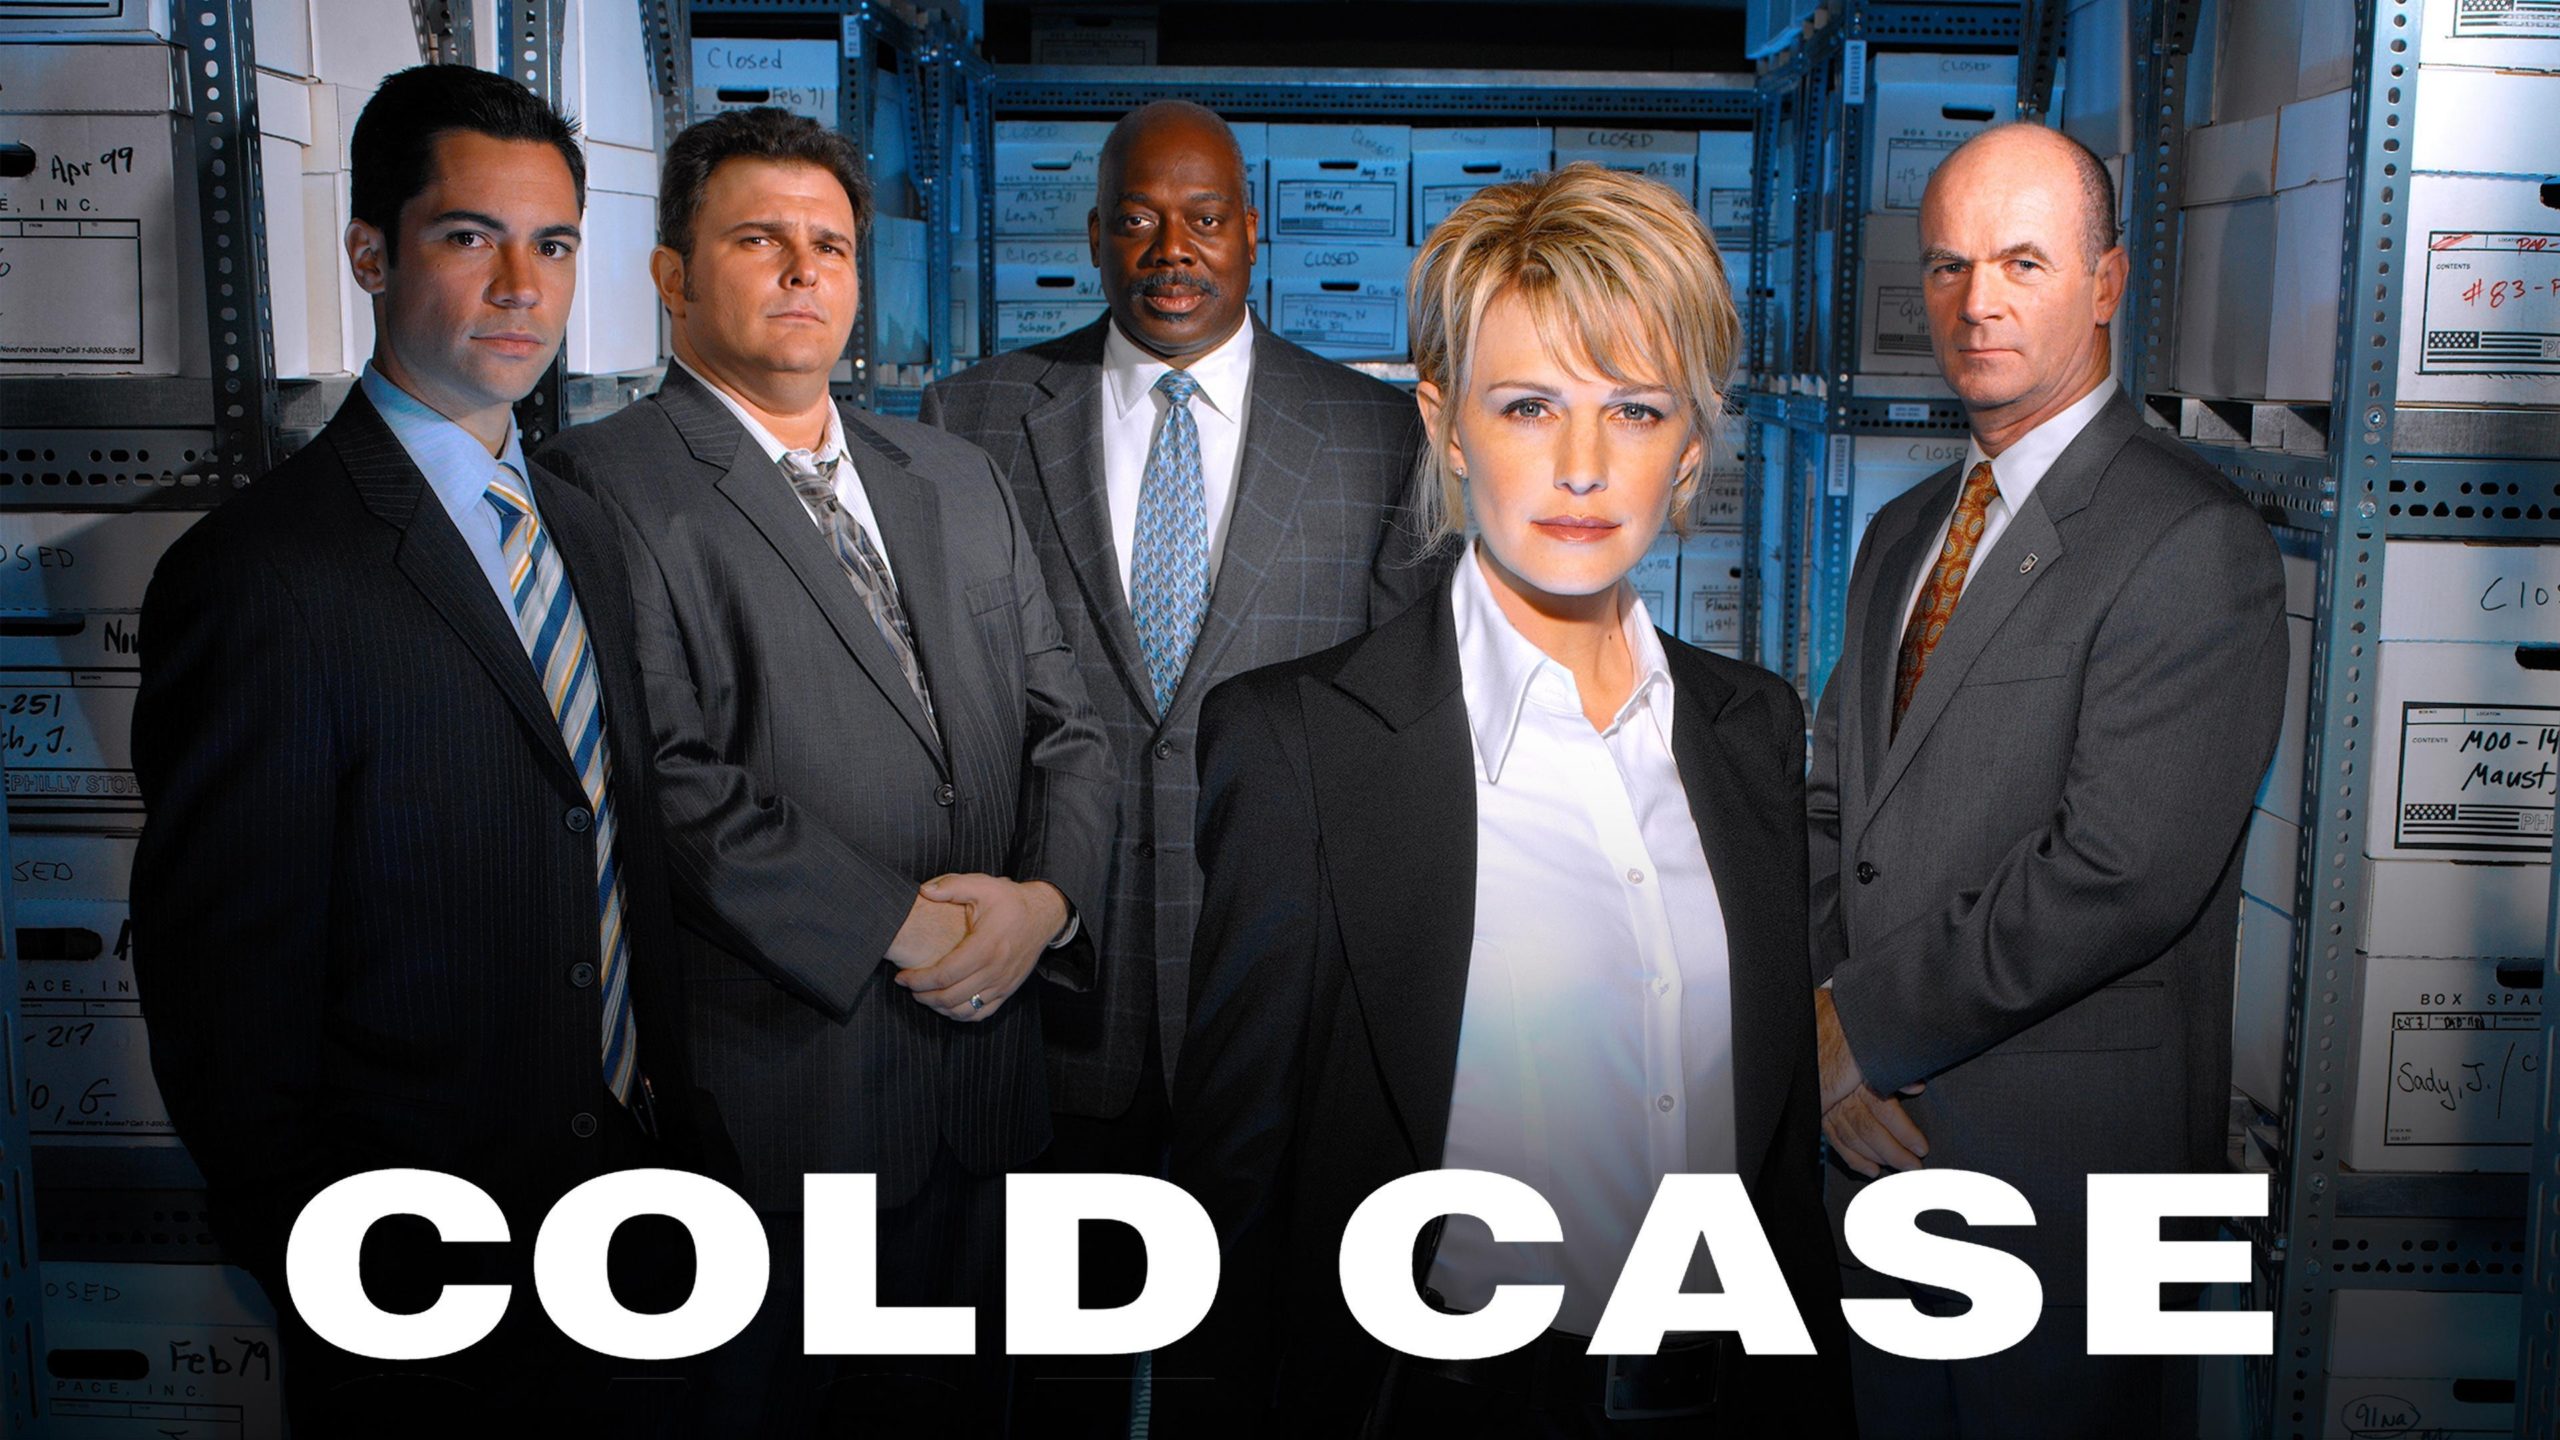 #Cold Case: CBS Considering Reboot of Procedural Drama from Original Series Creator